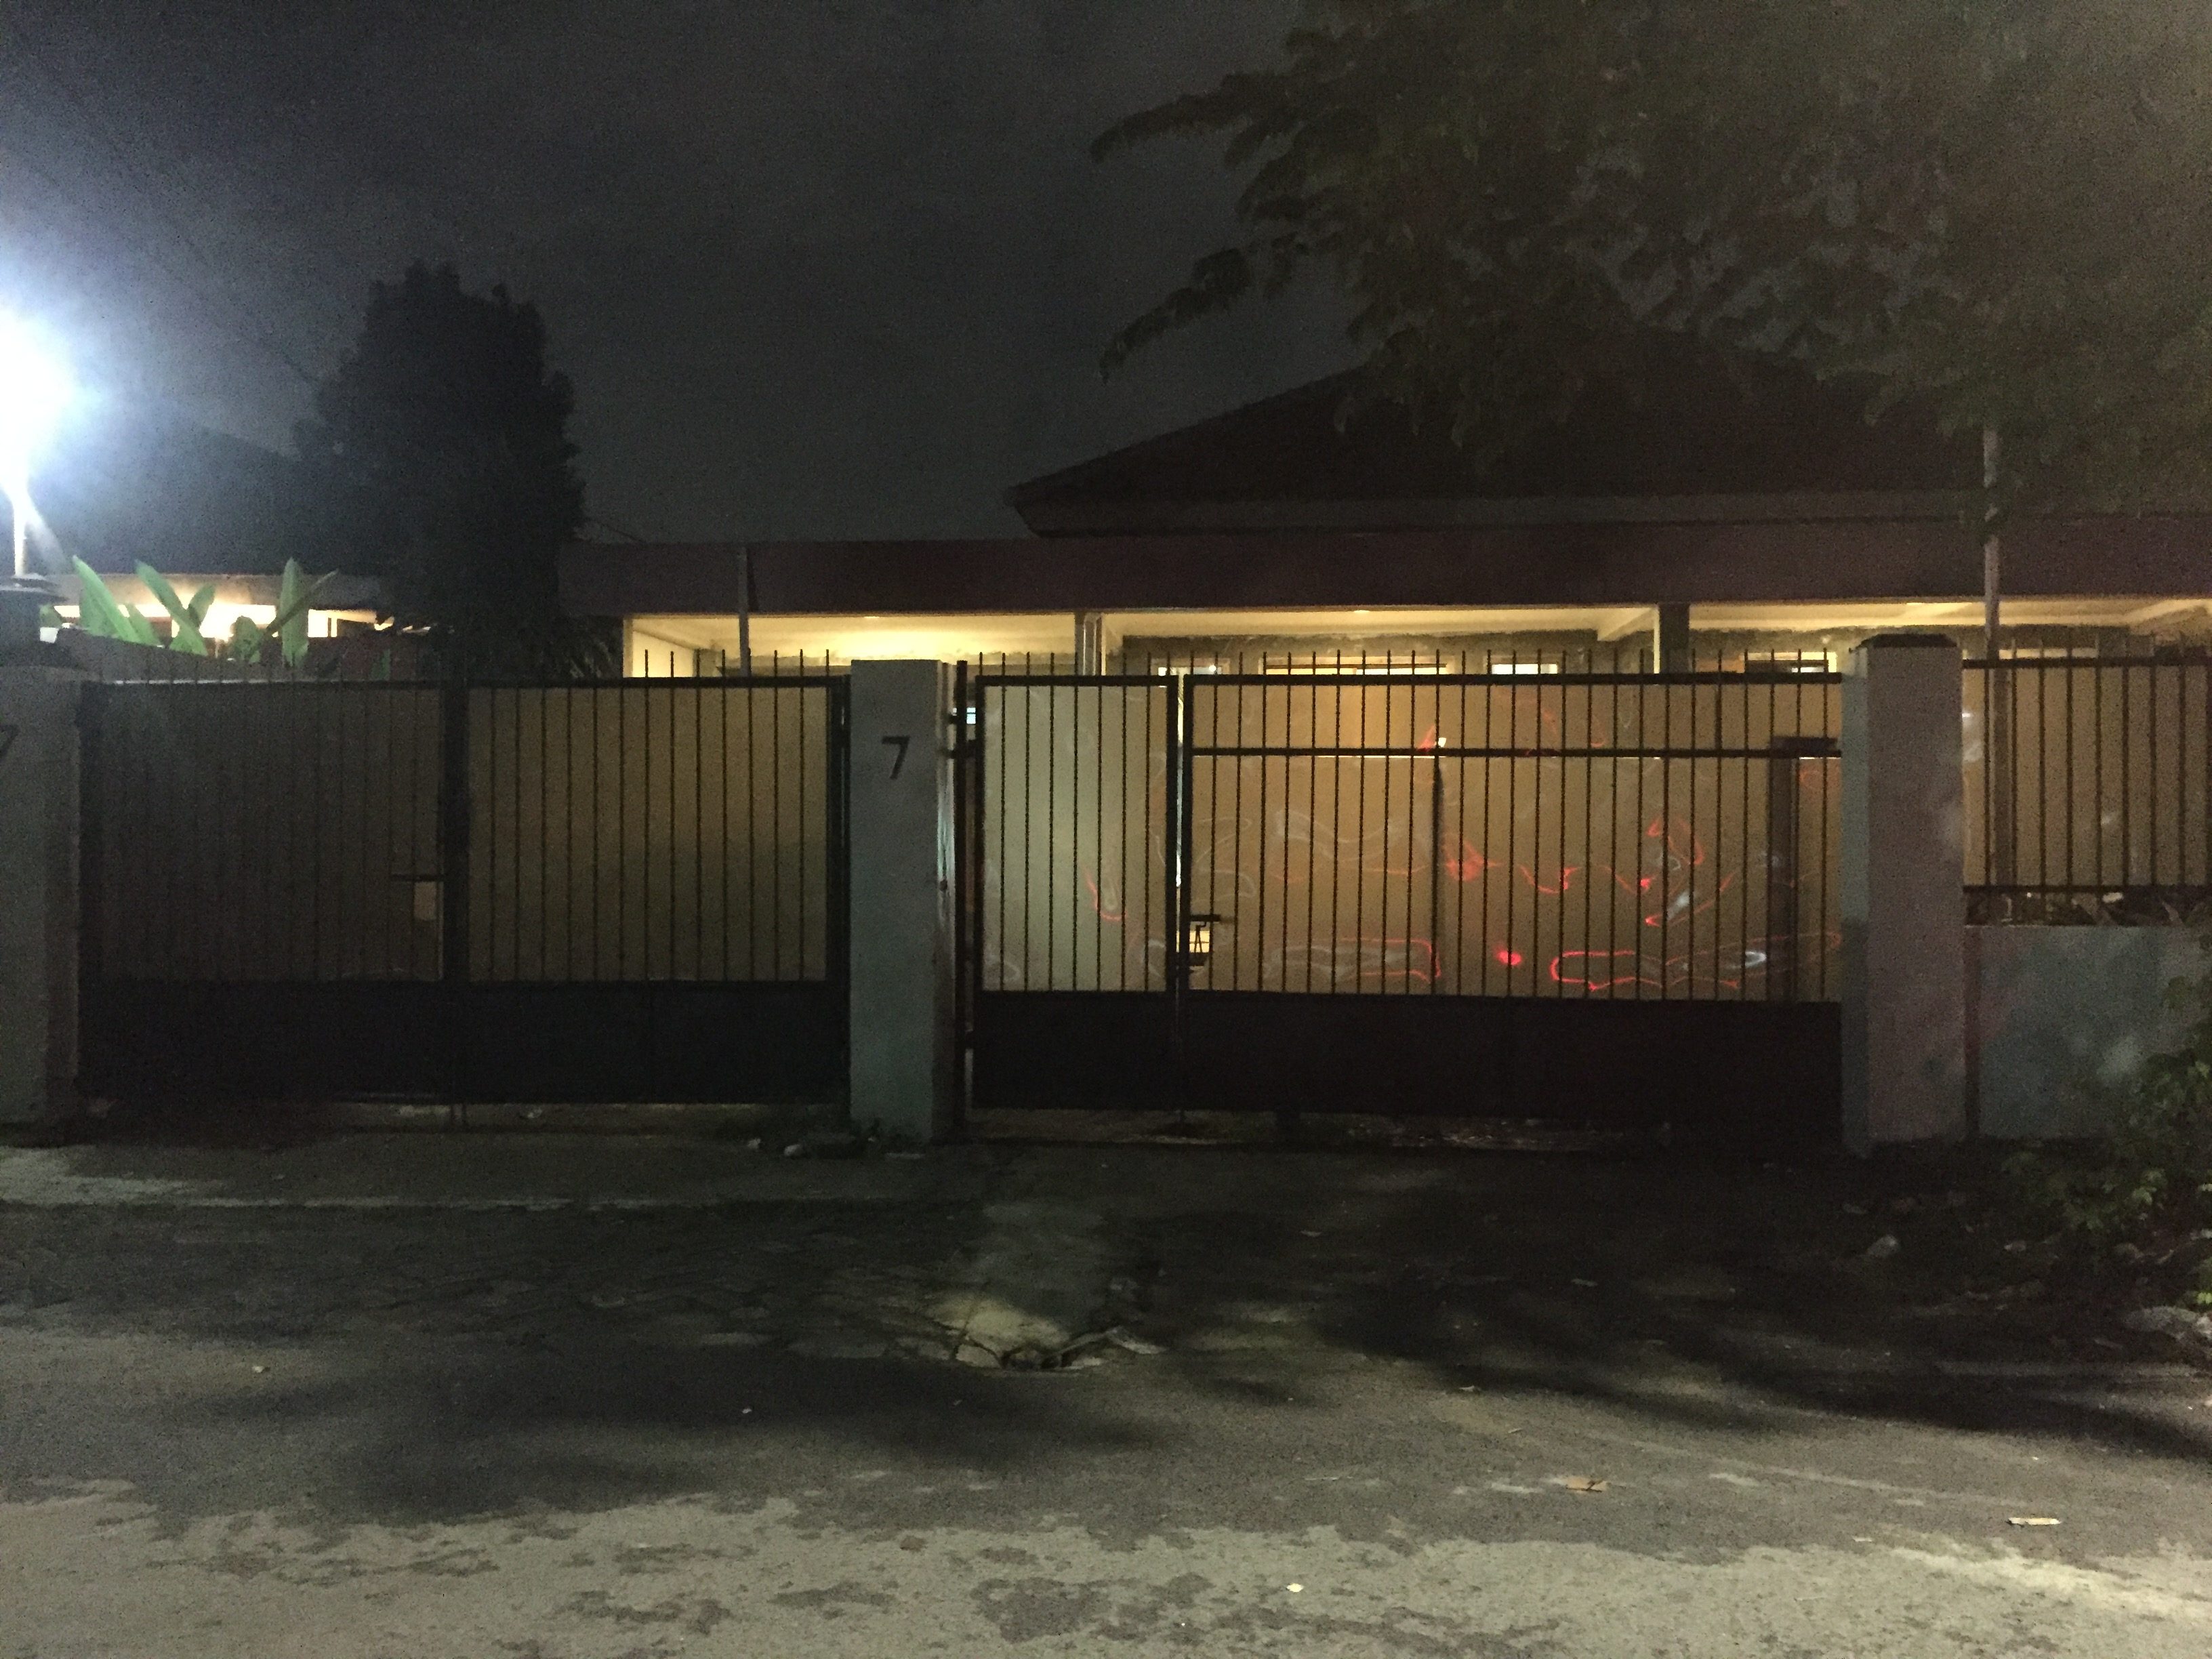 Bekas sebuah klinik aborsi ilegal di Jalan Cimandiri, Cikini, Jakarta Pusat, saat dikunjungi pada 15 Oktober 2016. Foto oleh Abdul Qowi Bastian/Rappler  